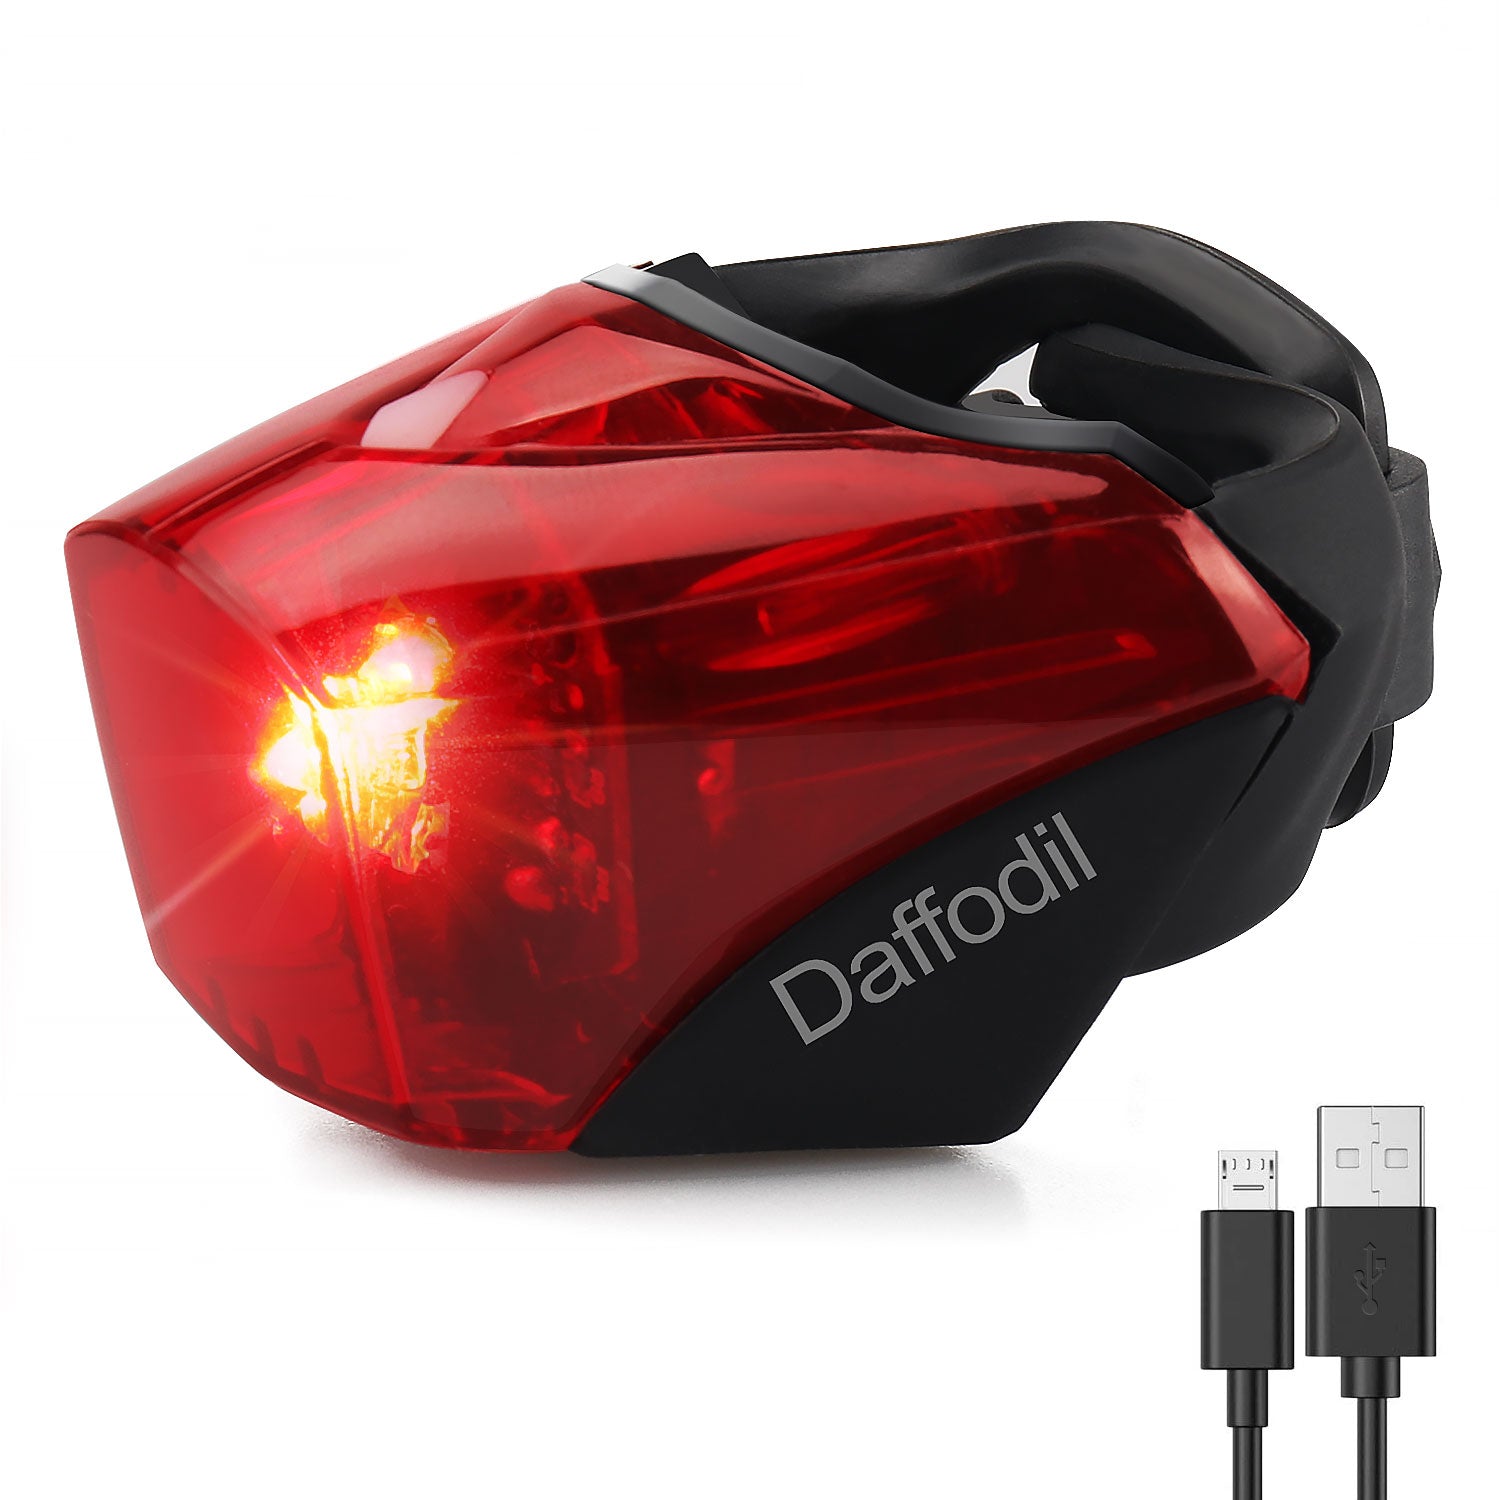 Daffodil ULT05 – USB LED Licht-8 Super Bright LED Leselampe - Für